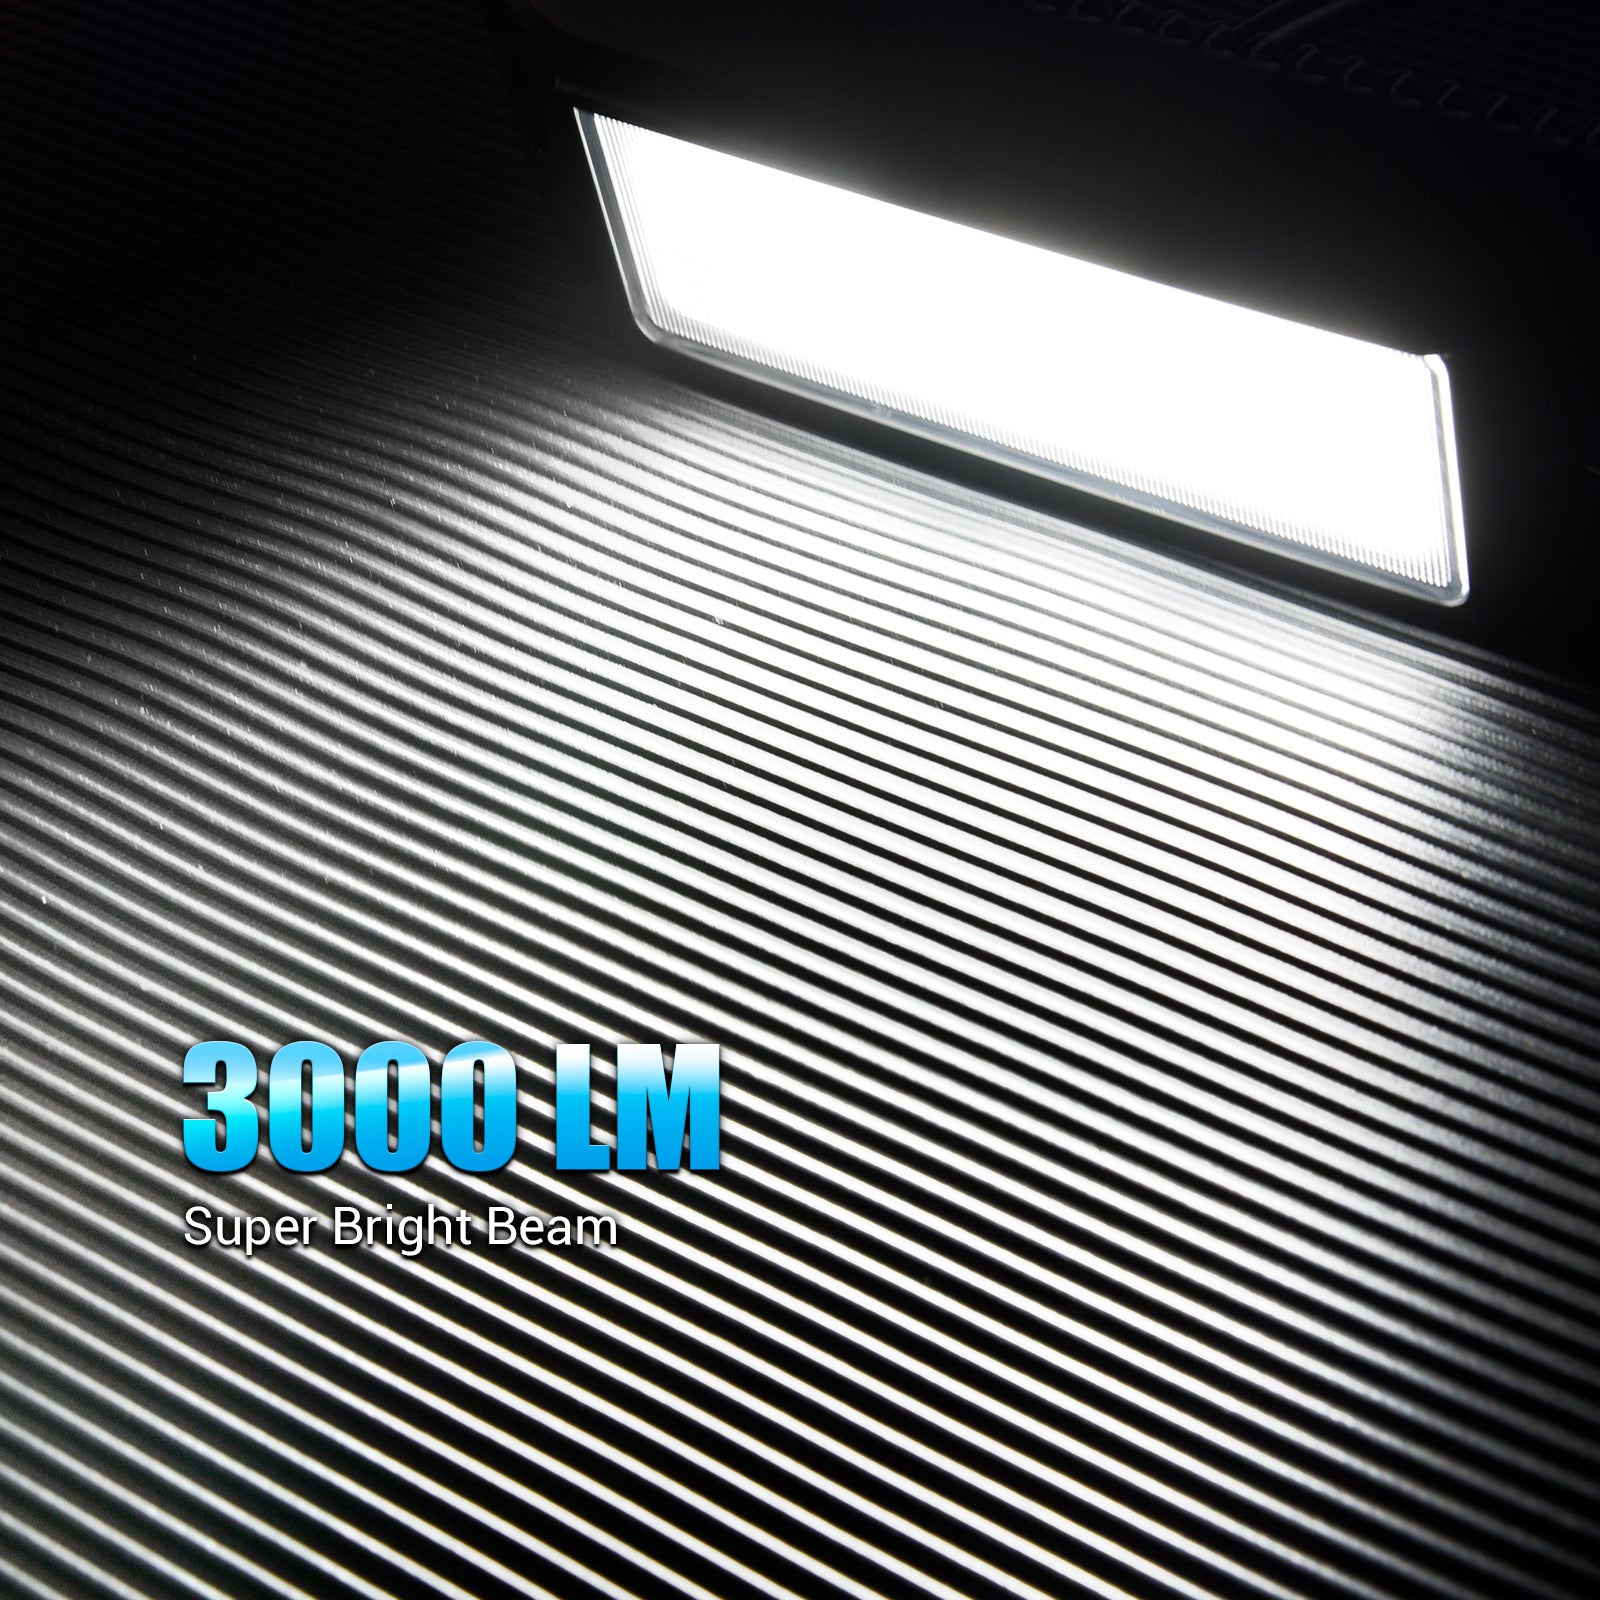 7.9″ RV Exterior LED Porch Utility Light, 3000 Lumen Awning Lights